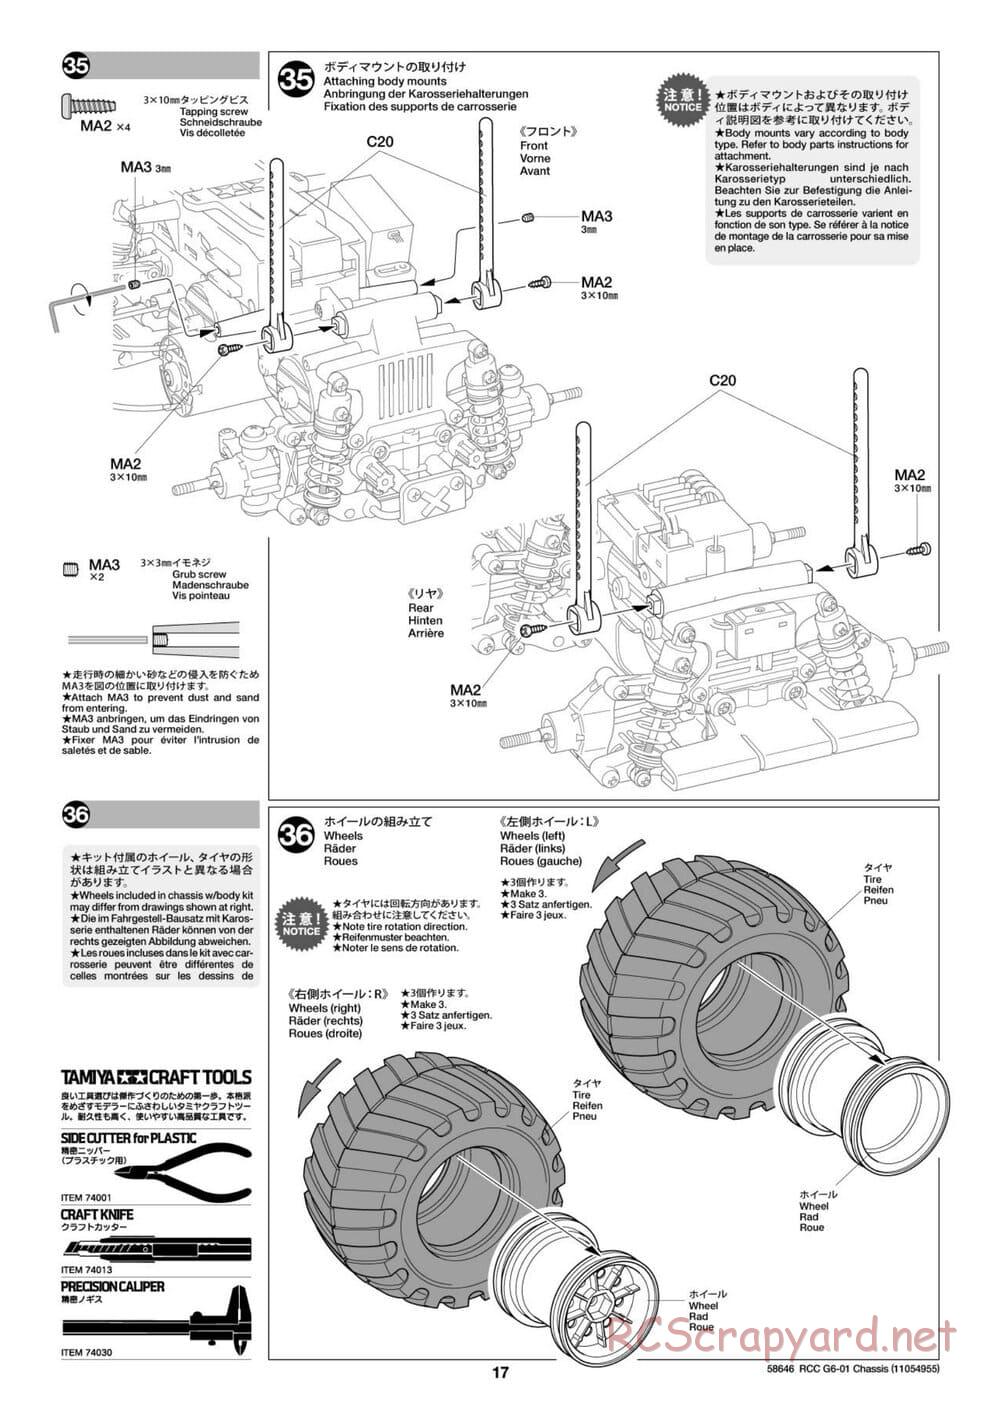 Tamiya - Konghead 6x6 - G6-01 Chassis - Manual - Page 17